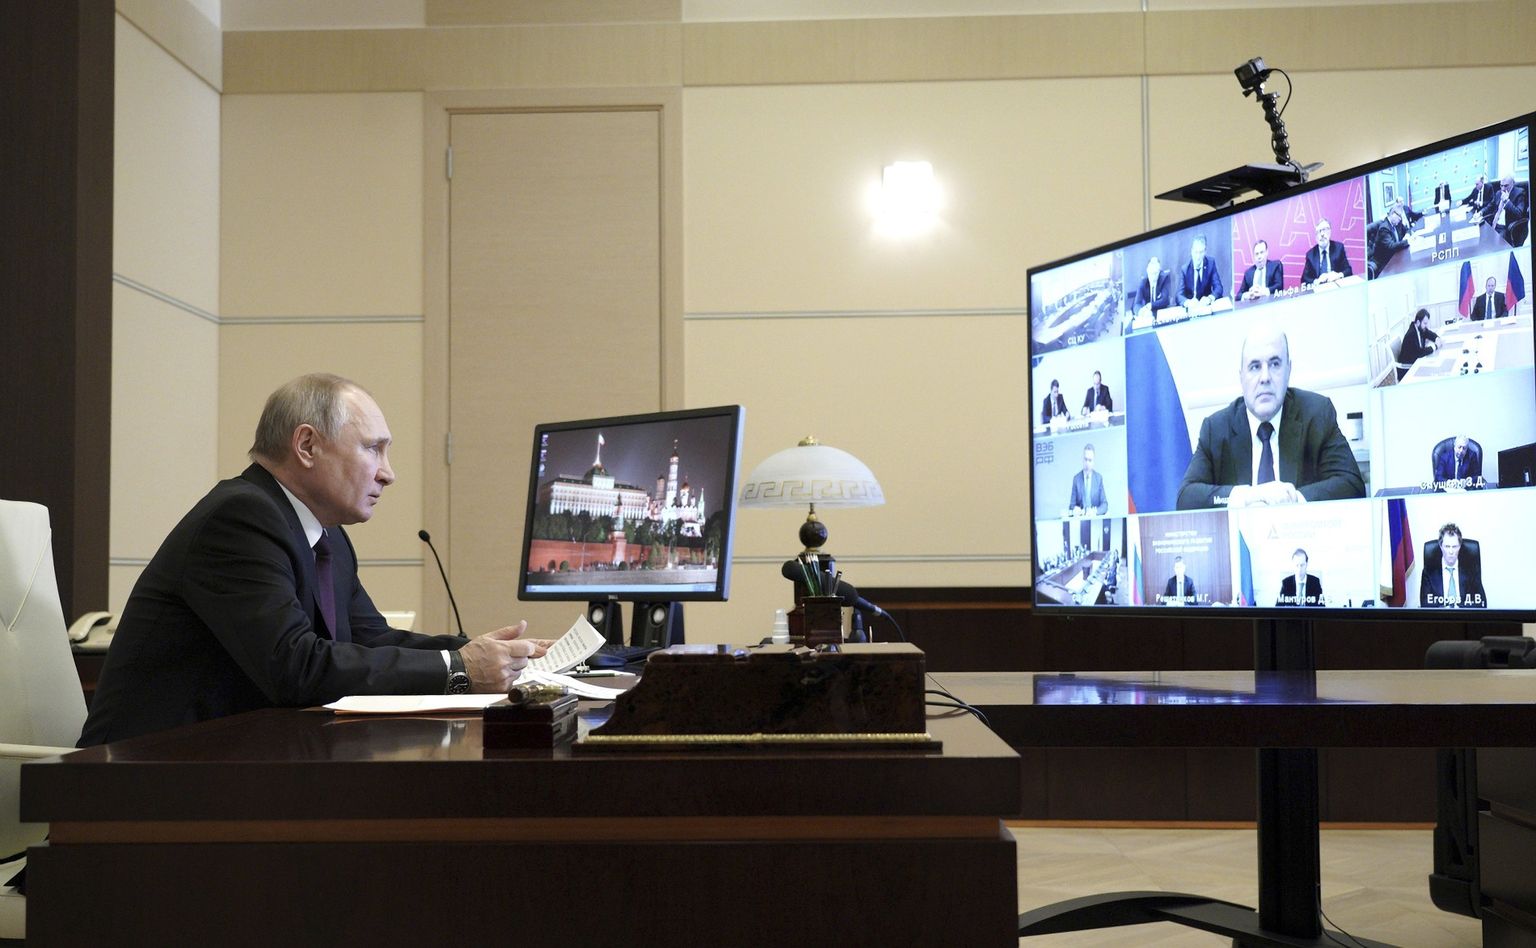 Vene president Vladimir Putin videokonverentsi pidamas.